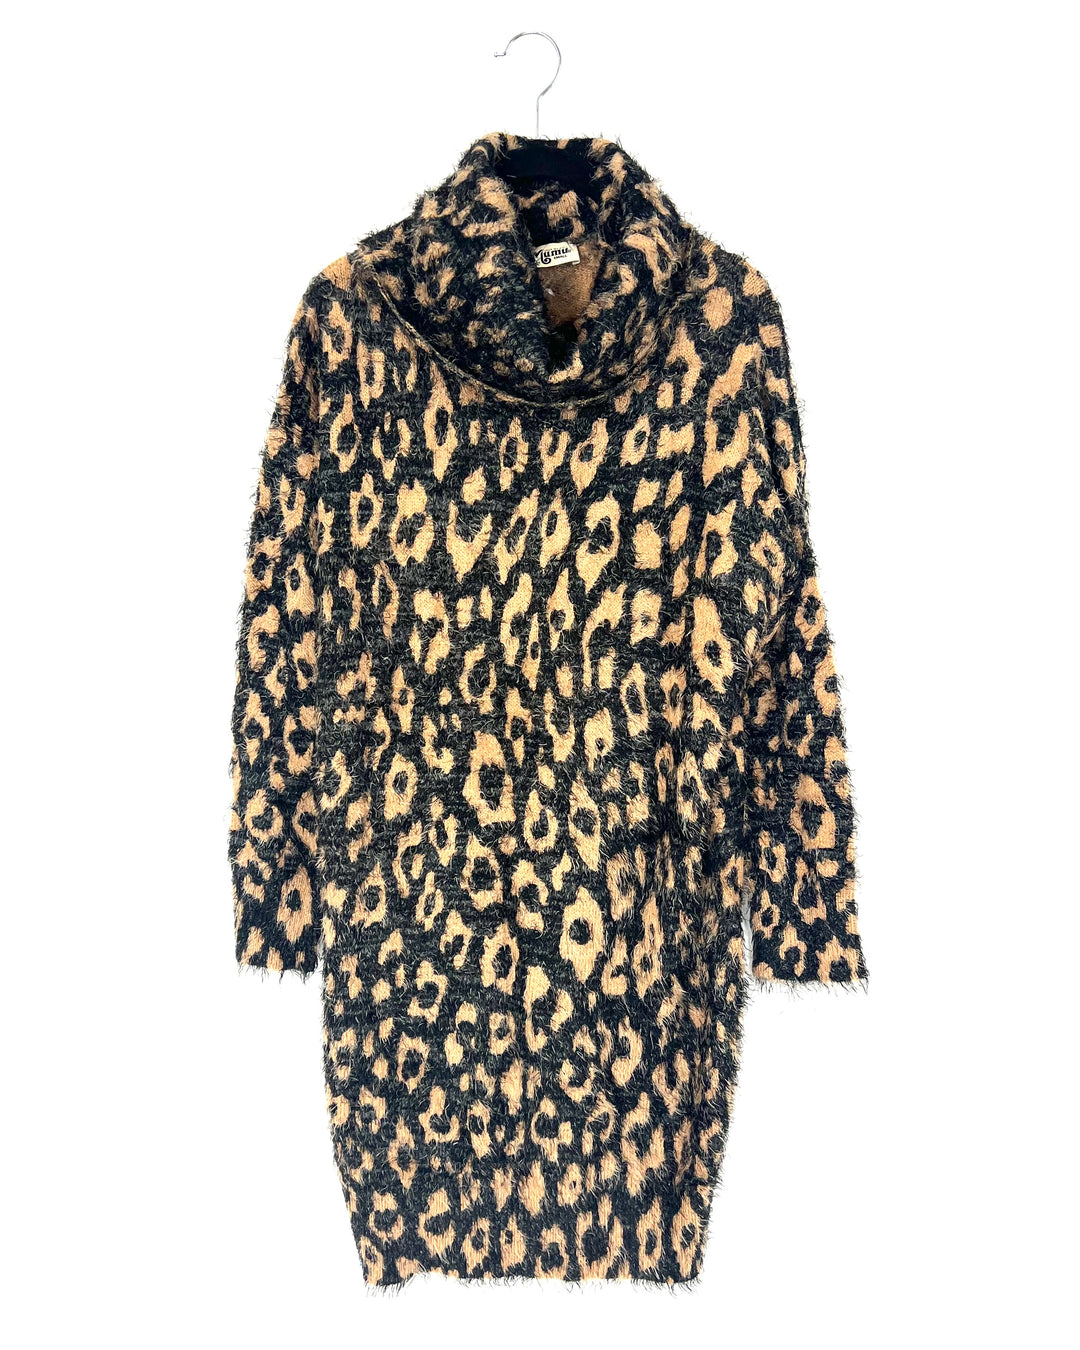 Black Cheetah Print Sweater Dress - Size 4/6